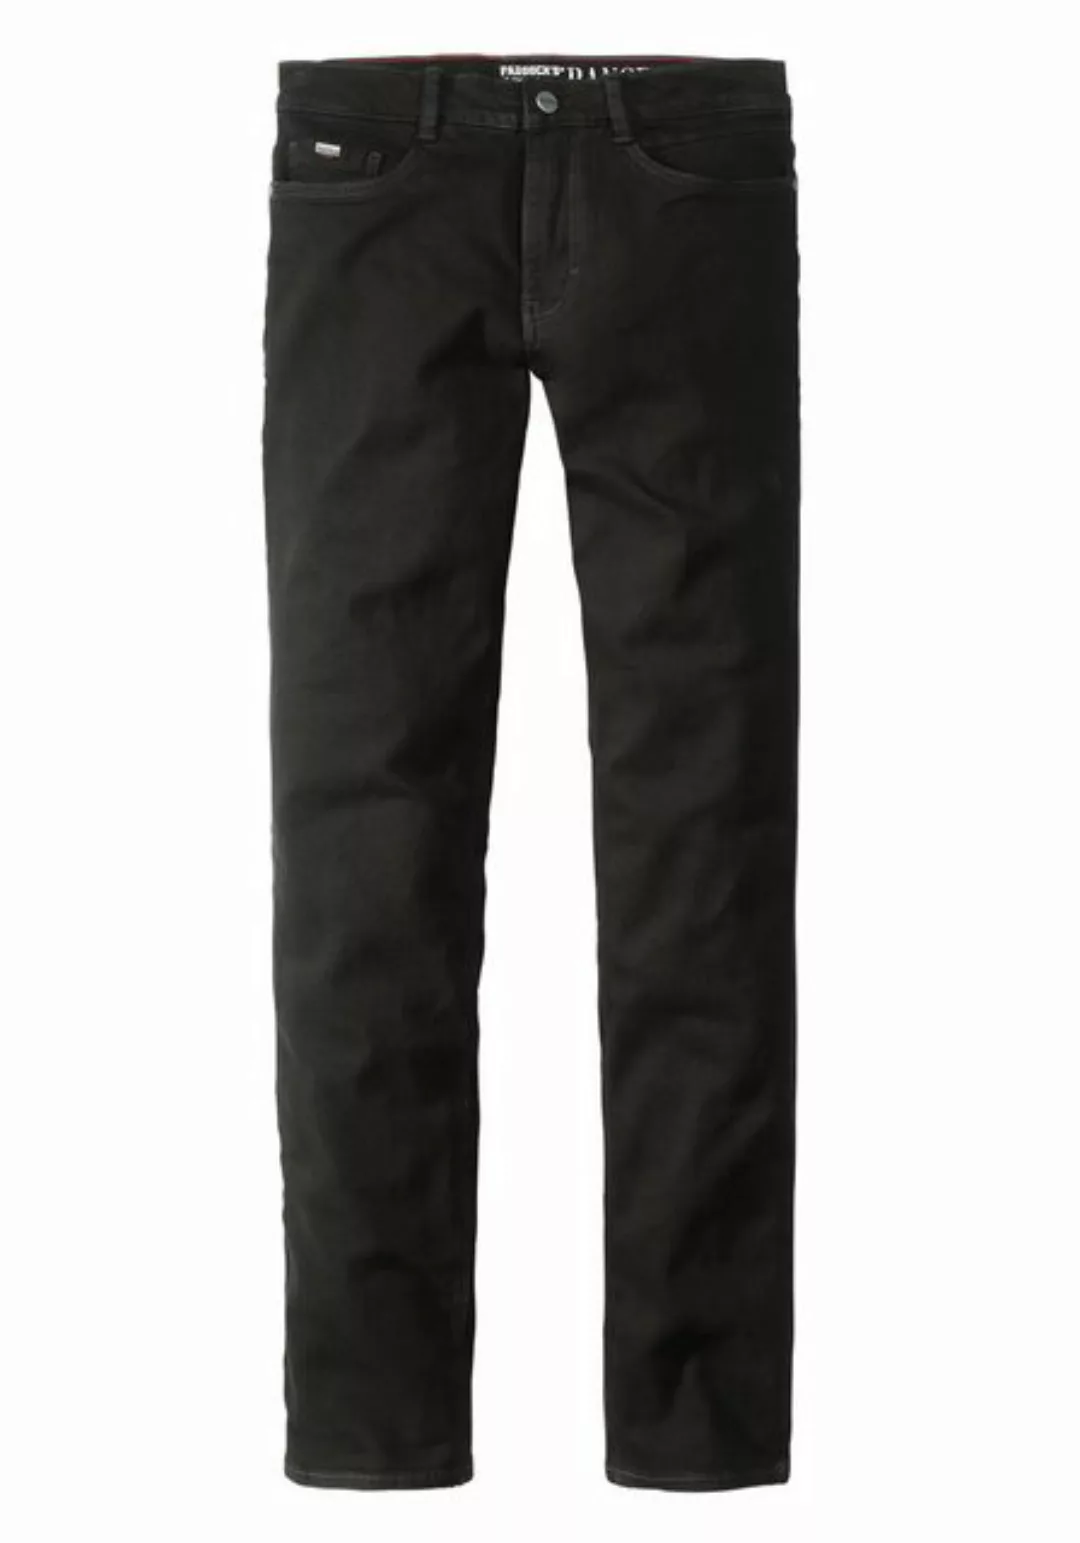 Paddock's 5-Pocket-Jeans PADDOCKS RANGER black 80081 4120.6001 - MOTION&COM günstig online kaufen